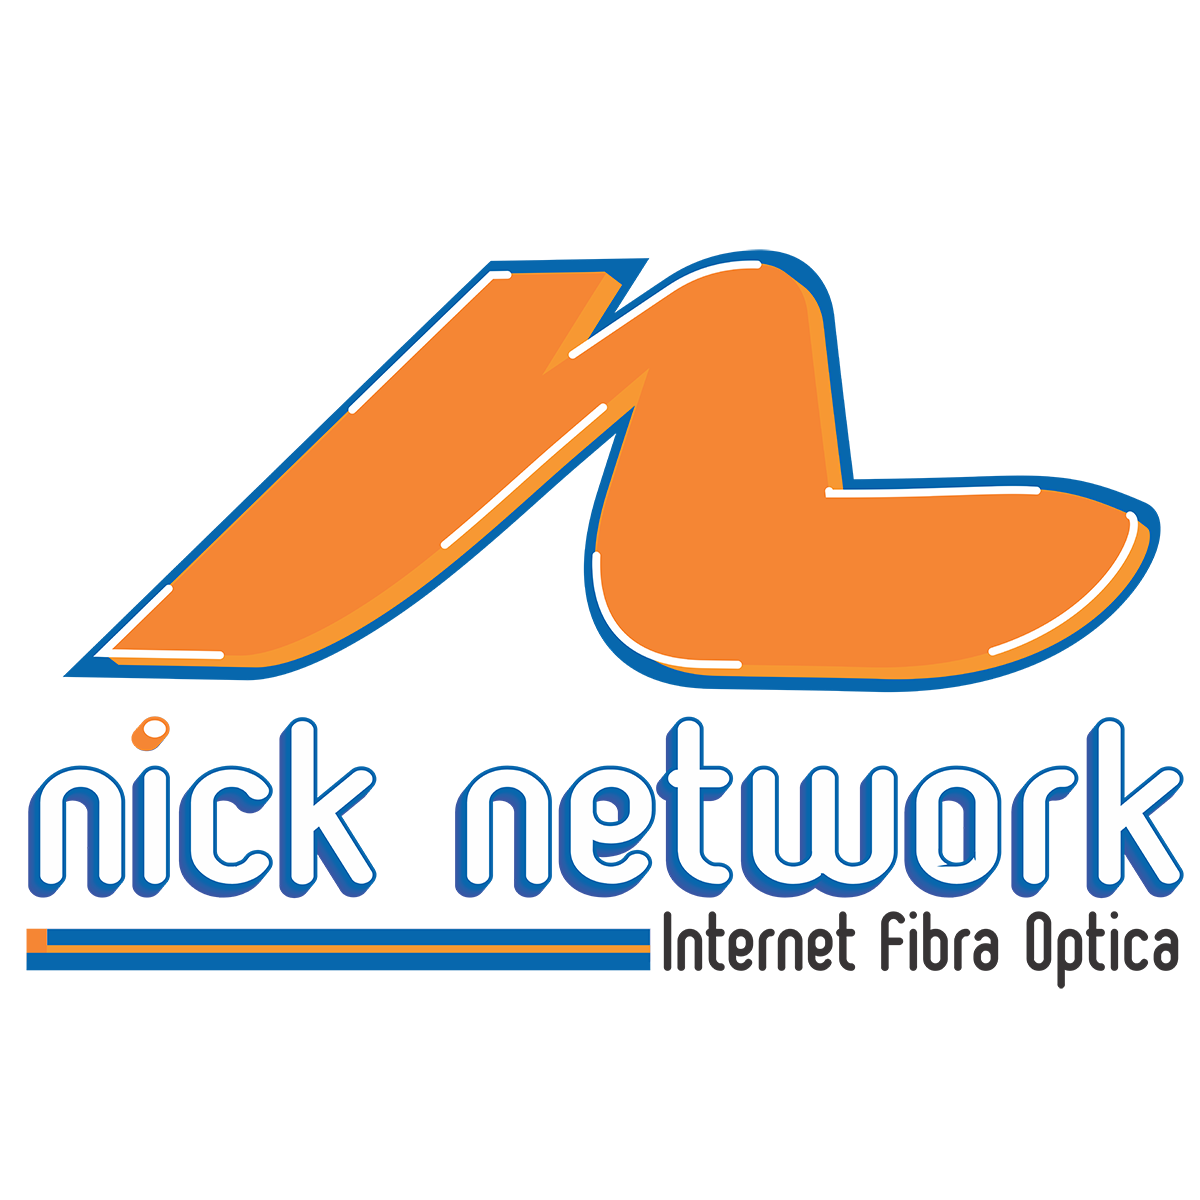 Nick Network